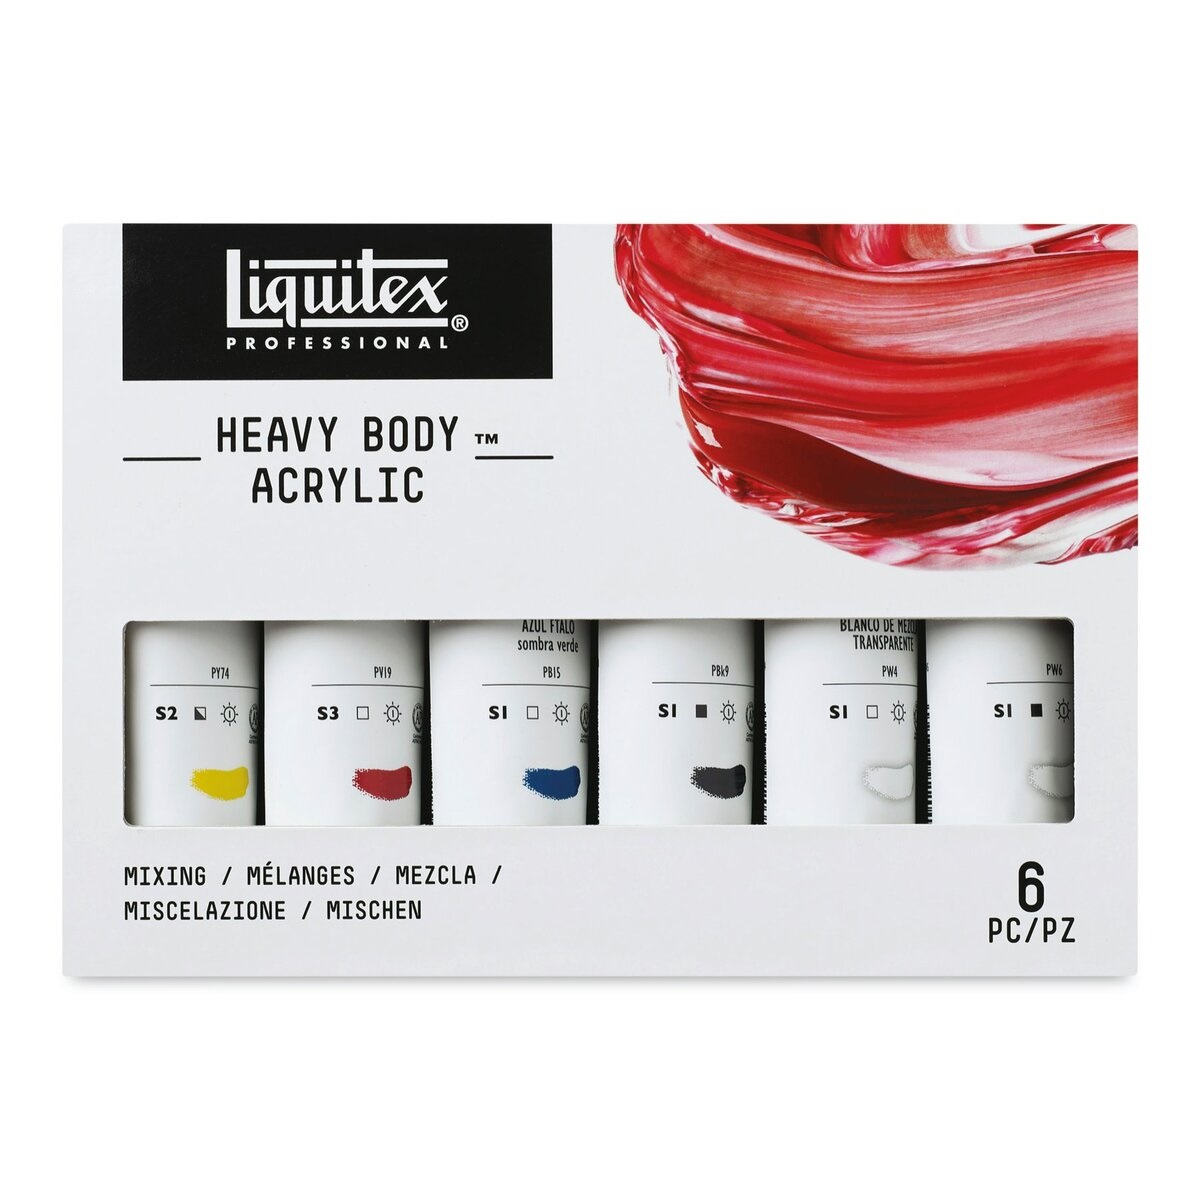 Liquitex Professional Heavy Body Acrylic Paint, 6 x 22ml (0.74-oz) Color  Set,Blue,Green,White